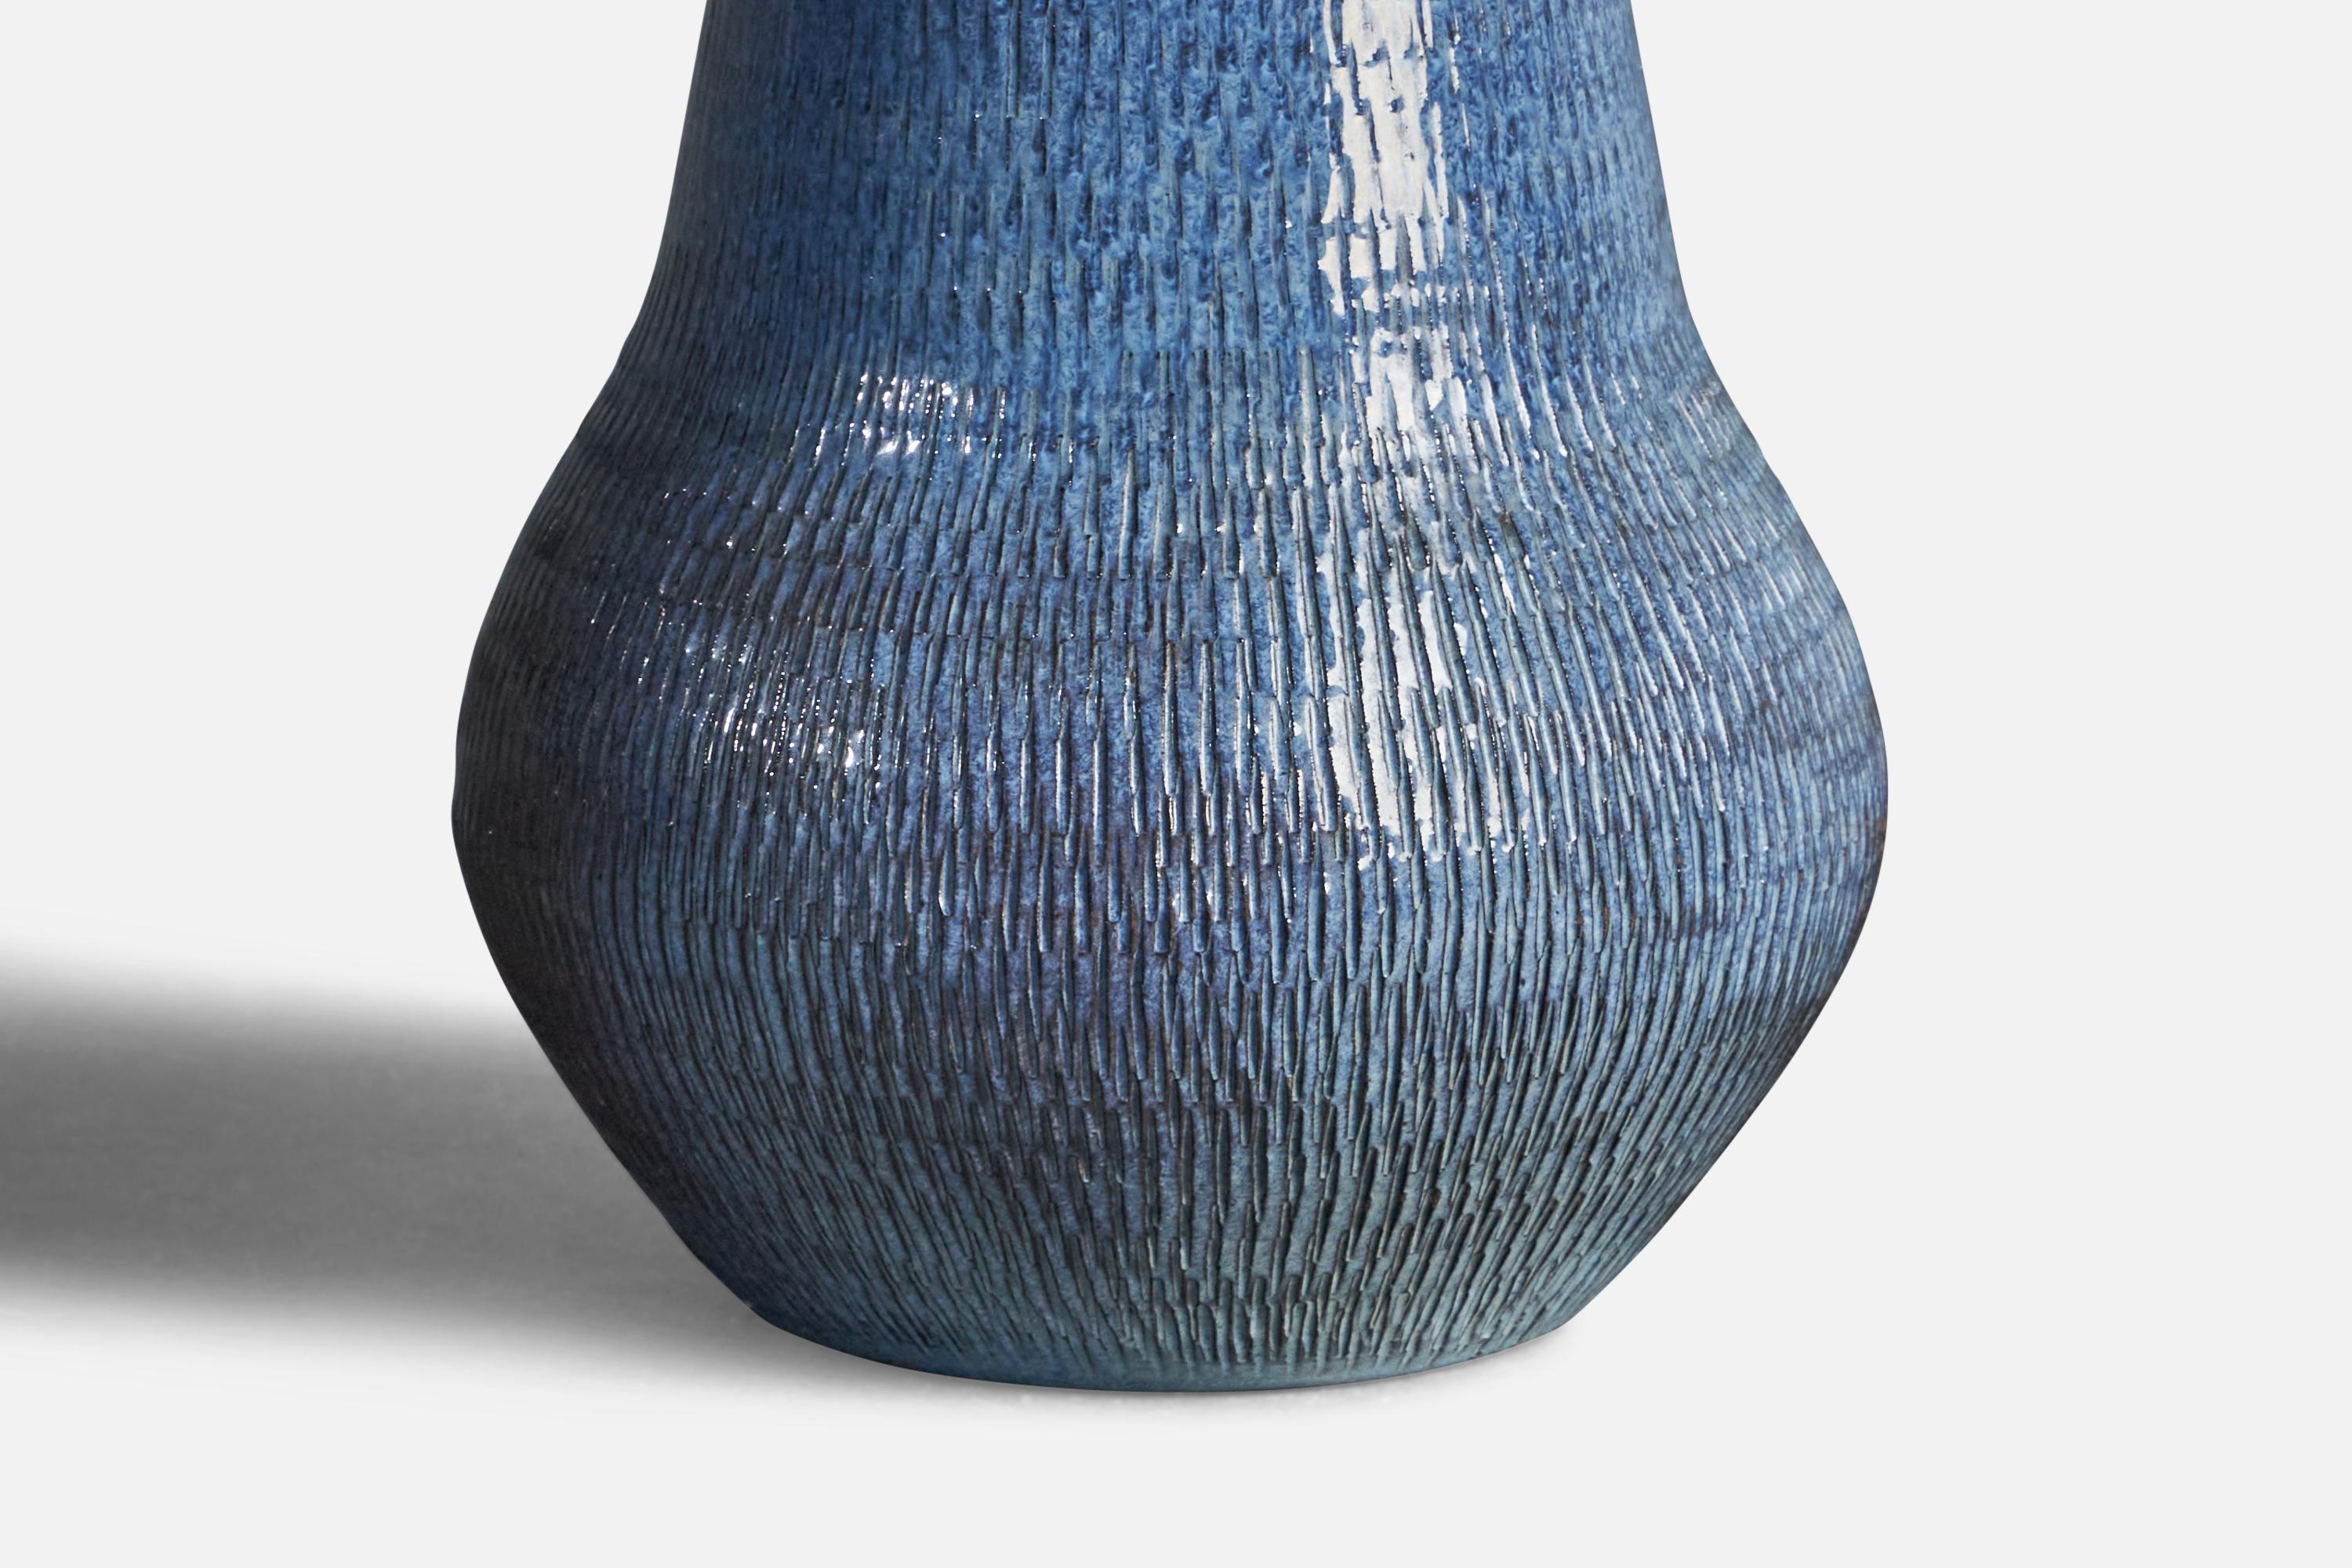 A blue-glazed incised earthenware vase designed by Ingrid Atterberg and produced by Upsala Ekeby, Sweden, 1950s.